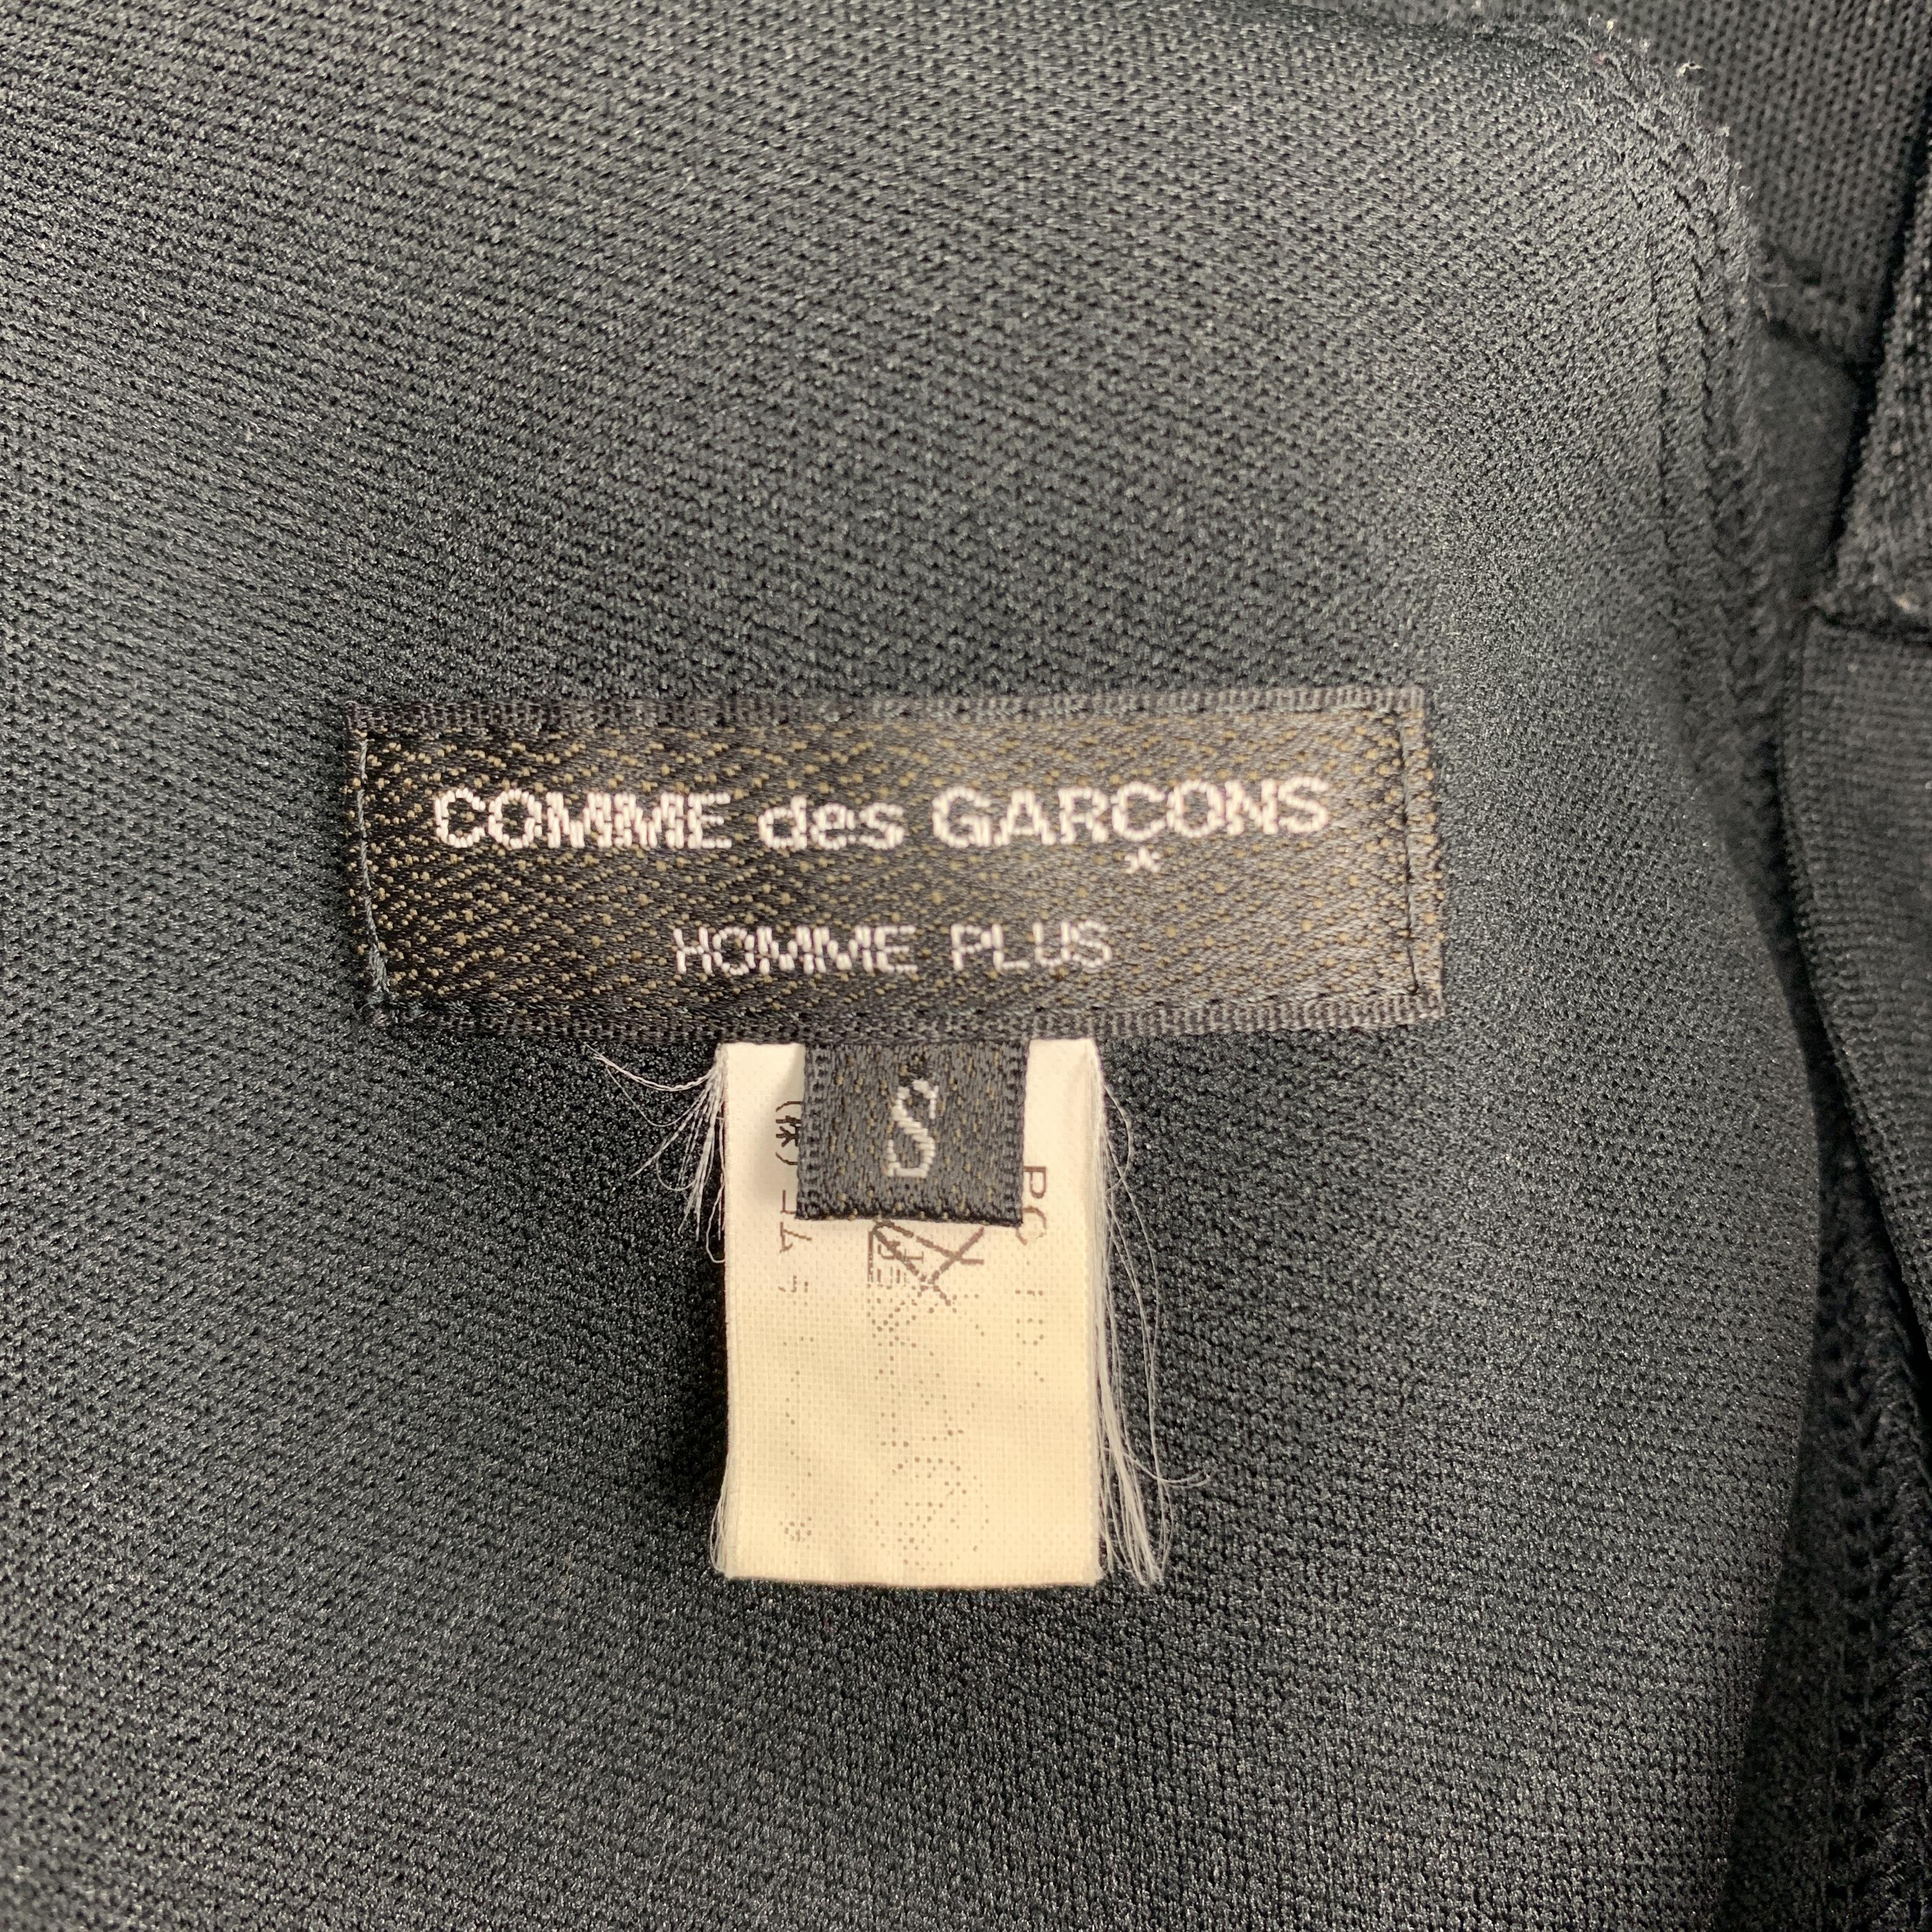 COMME des GARCONS HOMME PLUS S Black Pleated Kilt Skort Shorts In Excellent Condition In San Francisco, CA